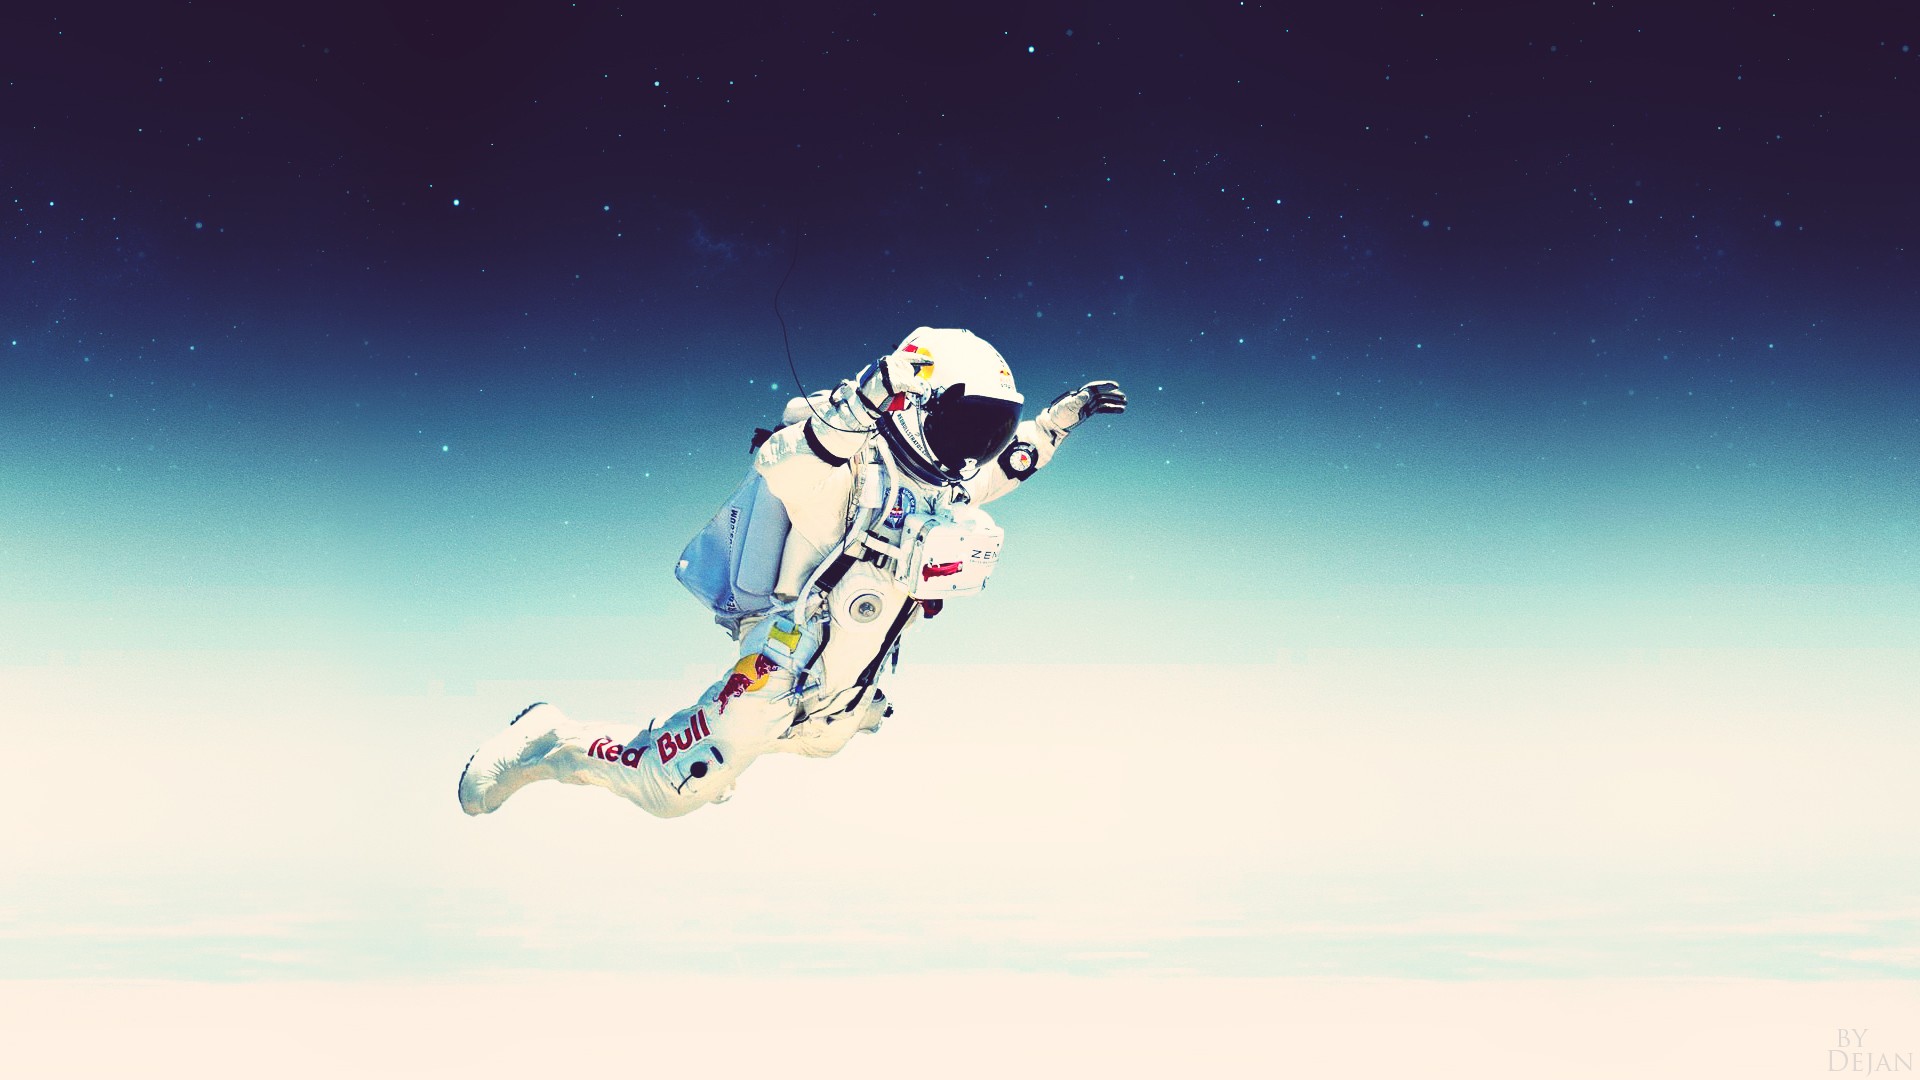 android jump, sports, skydiving, felix baumgartner, red bull